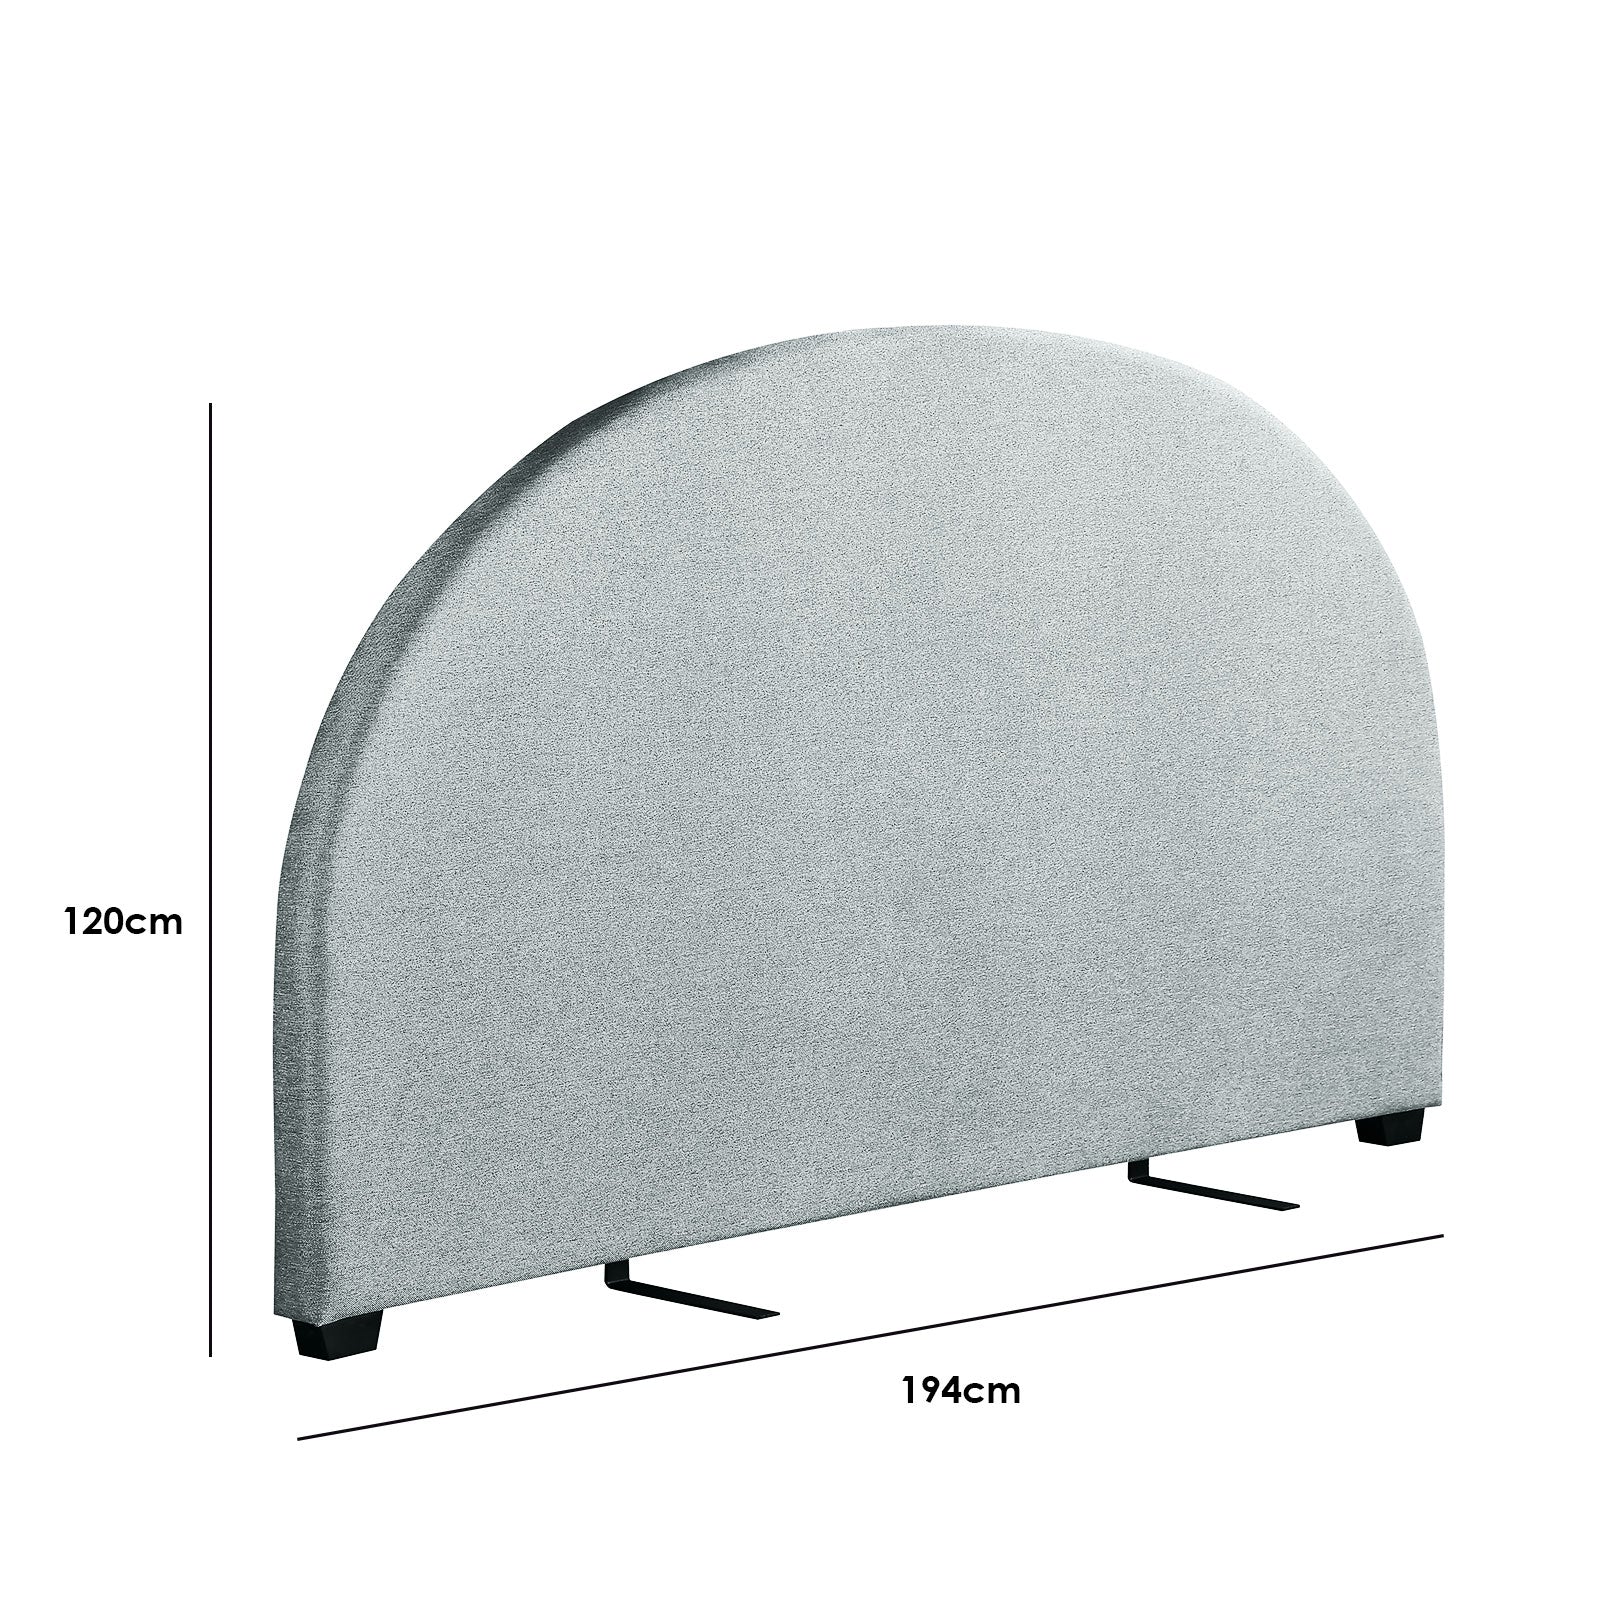 Milano Decor Barcelona Curved Light Grey Bed Head Headboard Bedhead Upholstered - King - Light Grey